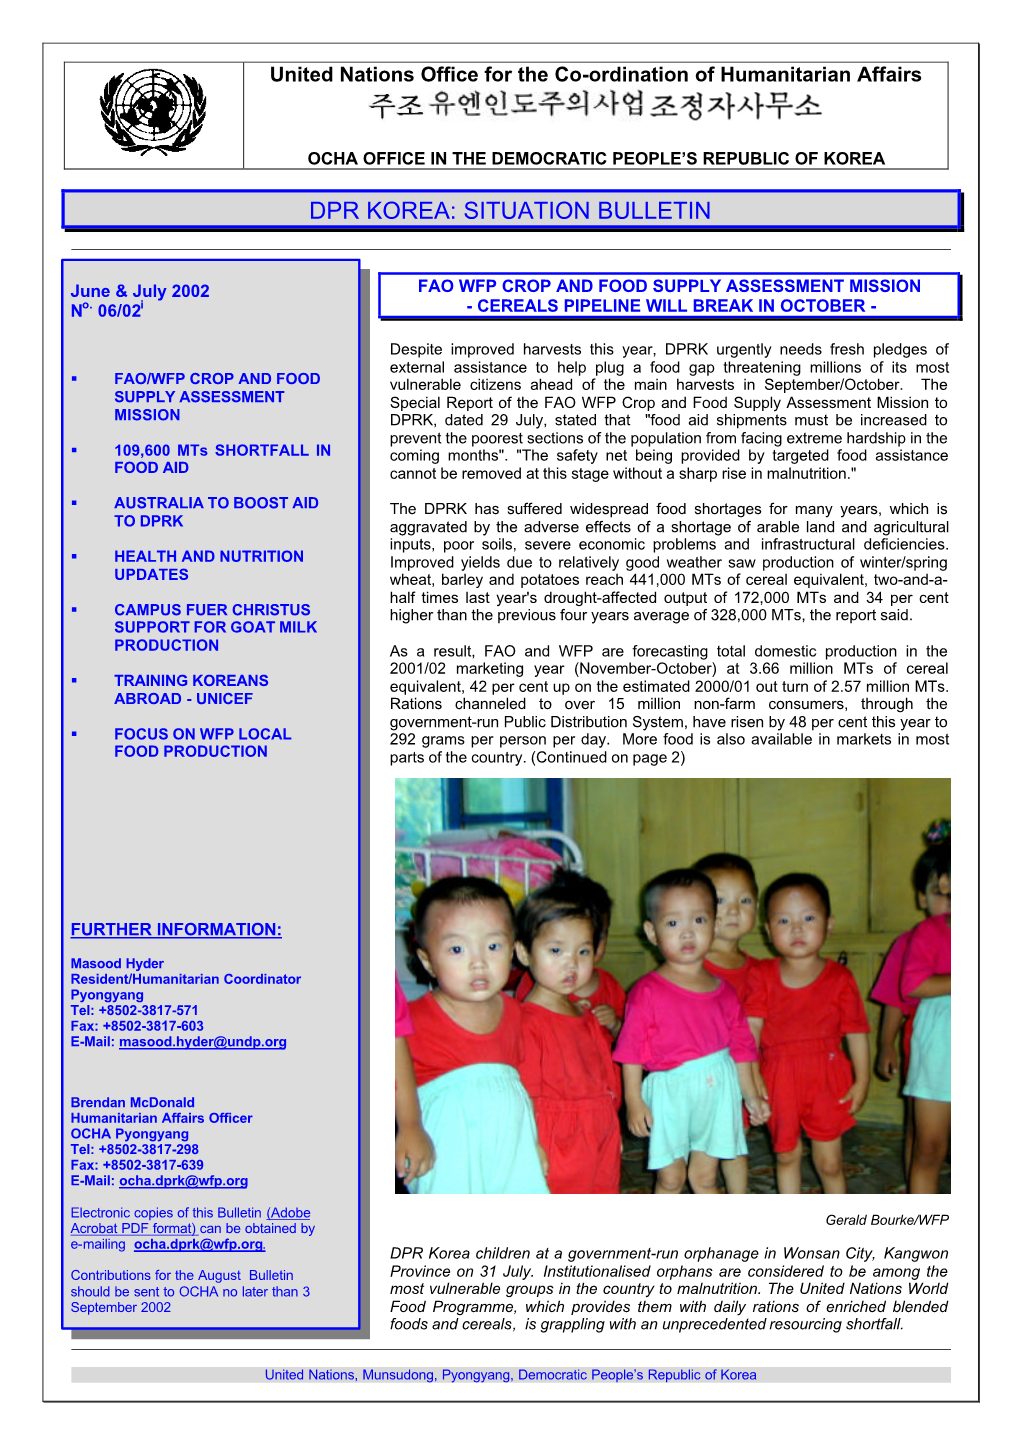 OCHA DPRK Bulletin